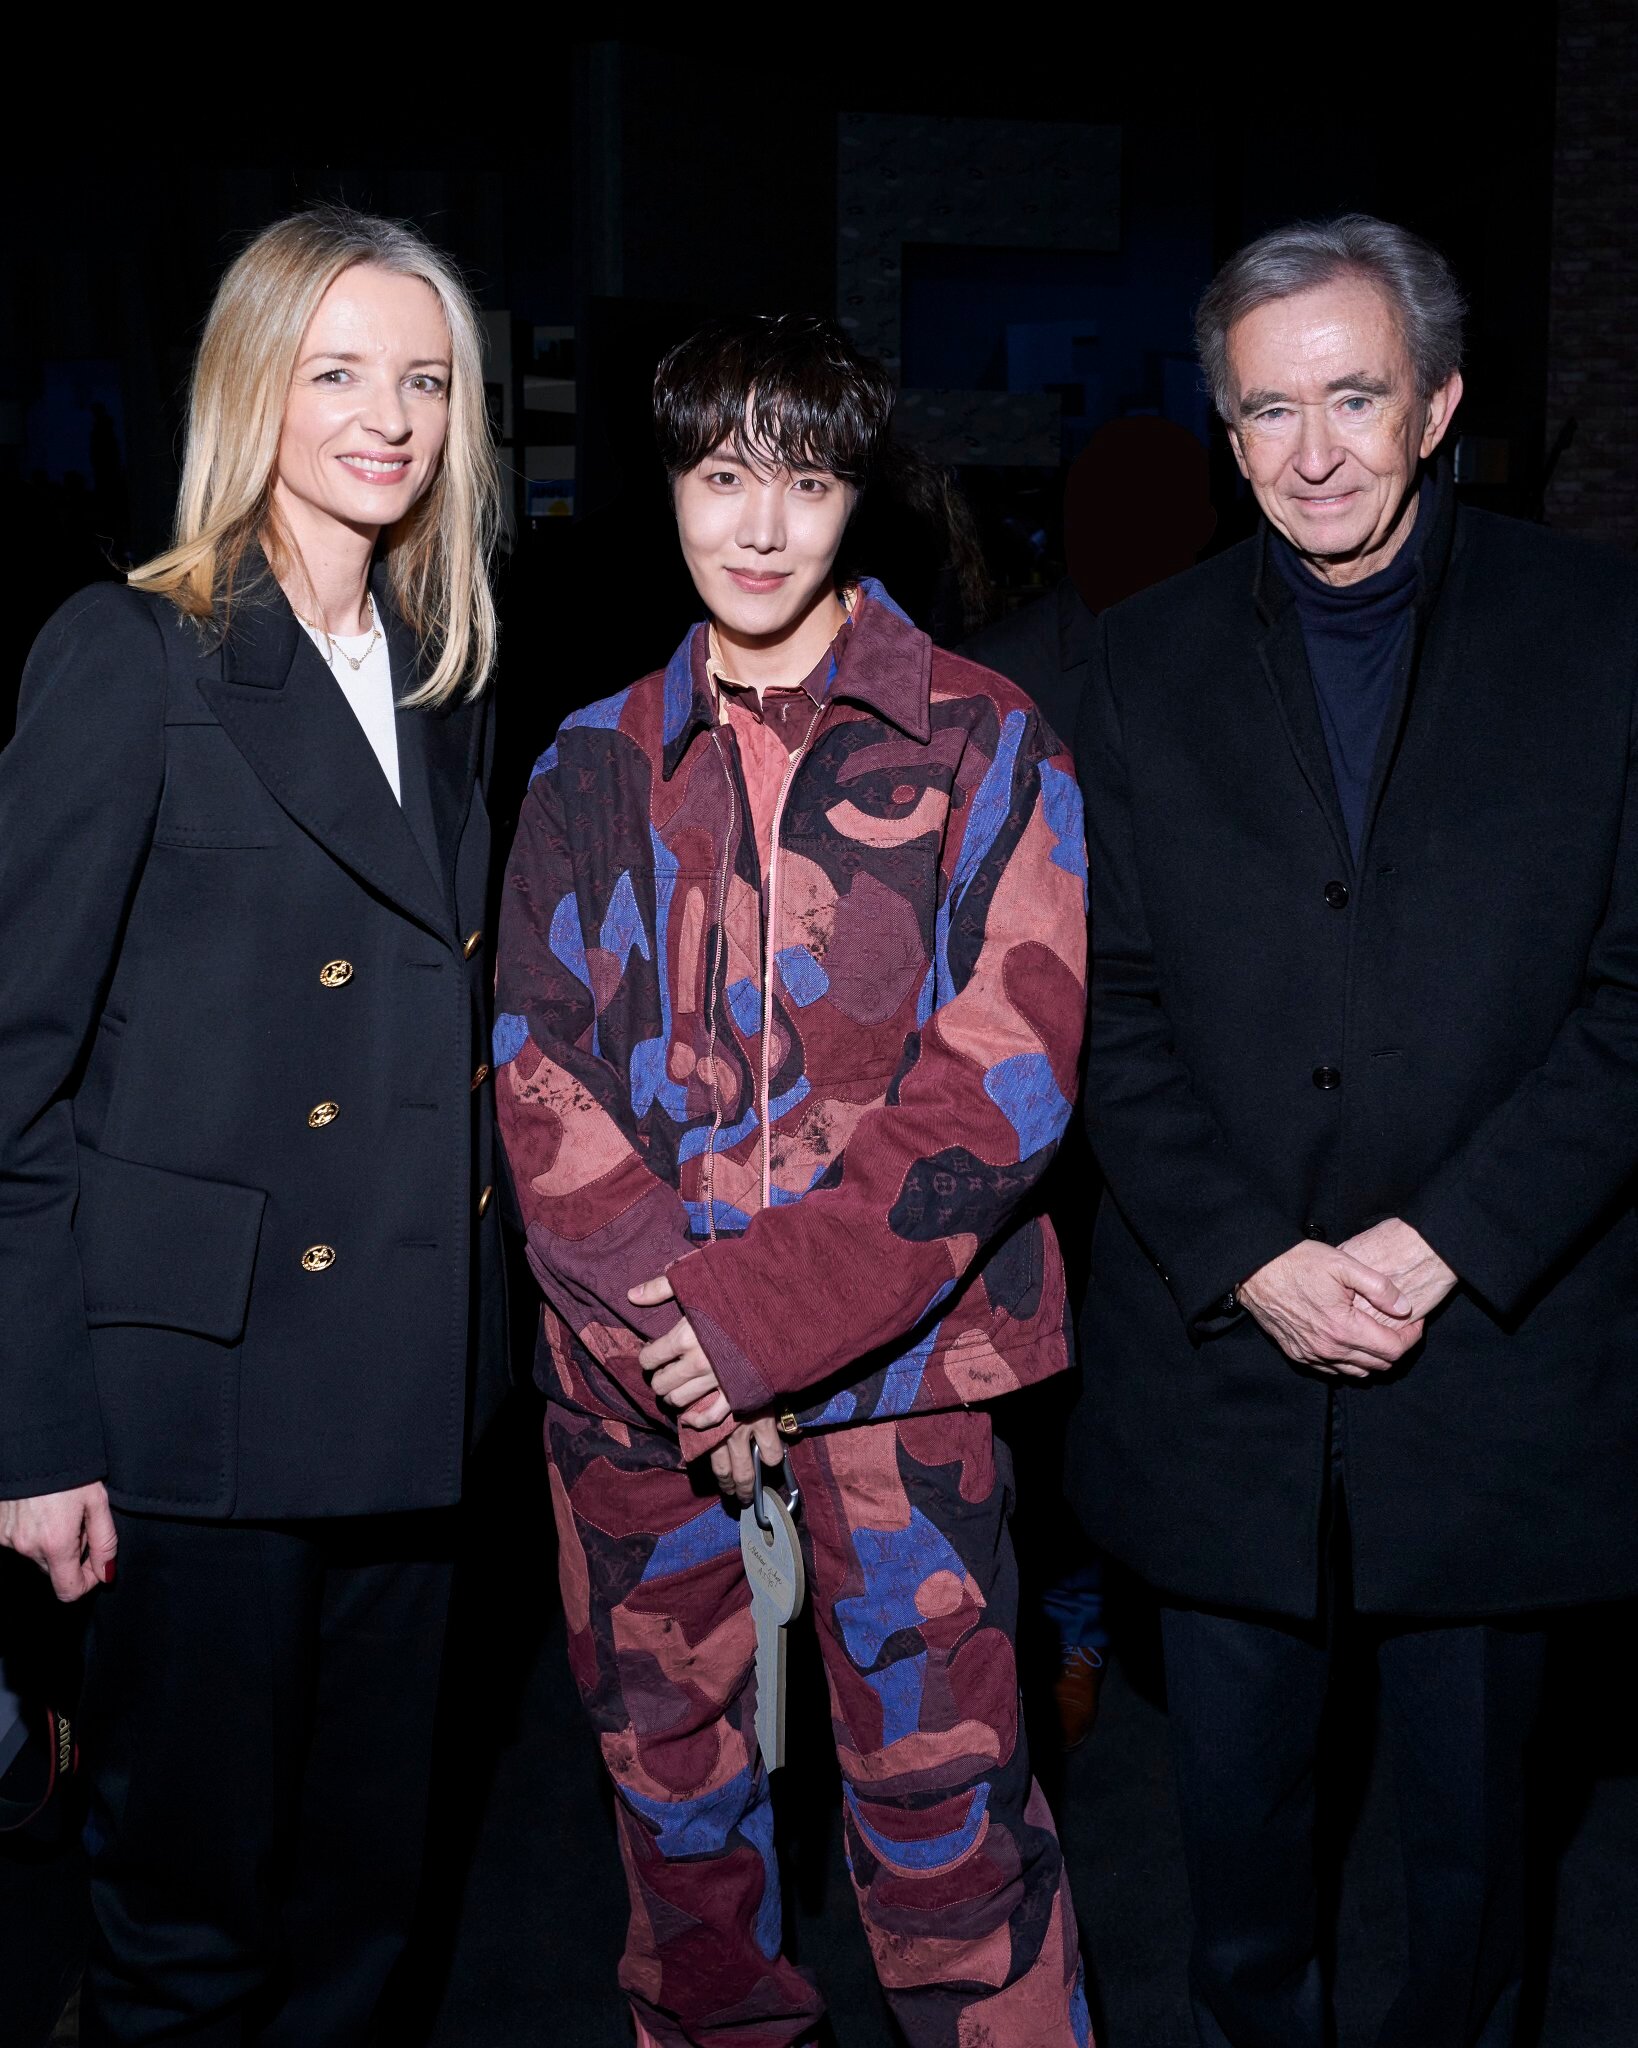 BTS J-Hope to shine in Louis Vuitton 2023 Paris fashion show